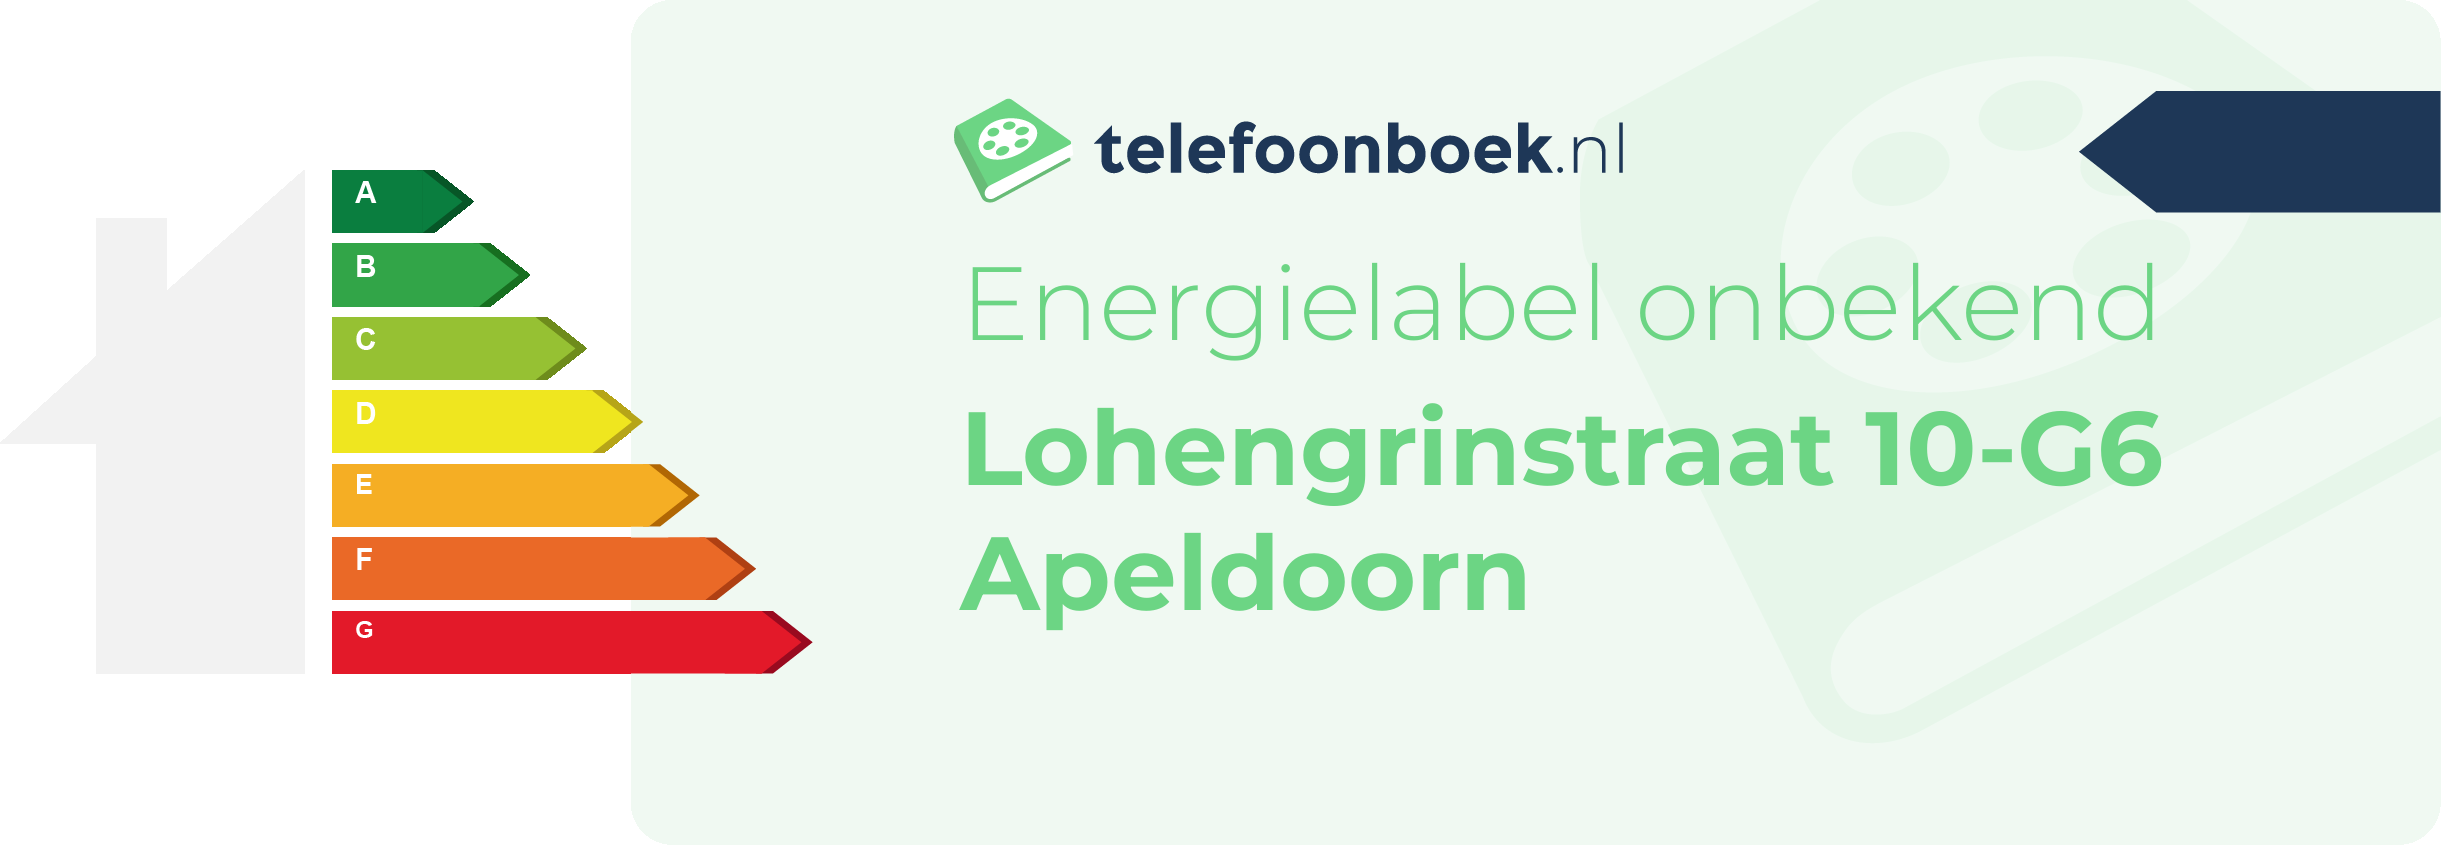 Energielabel Lohengrinstraat 10-G6 Apeldoorn